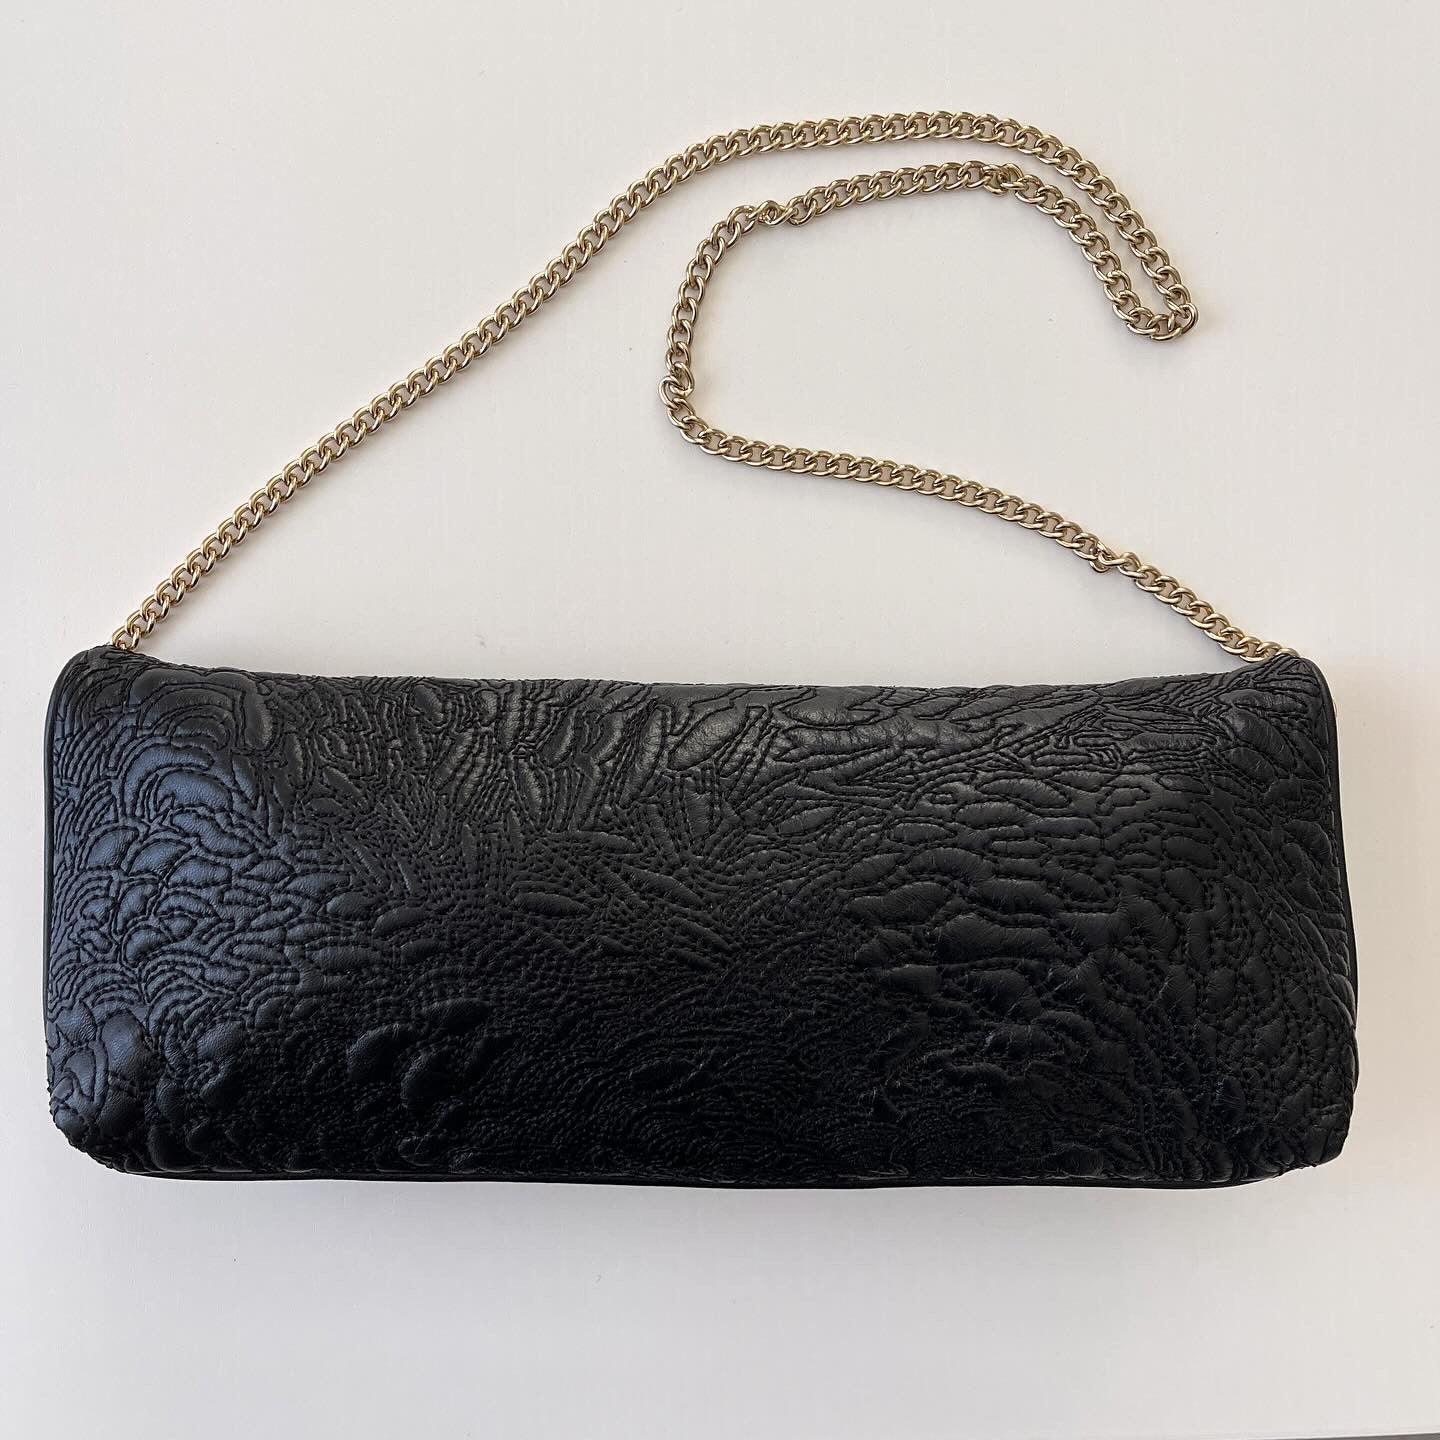 SHANGHAI TANG - SHANGHAI TANG Leather Handbag With Jade - AVVIIVVA.COM